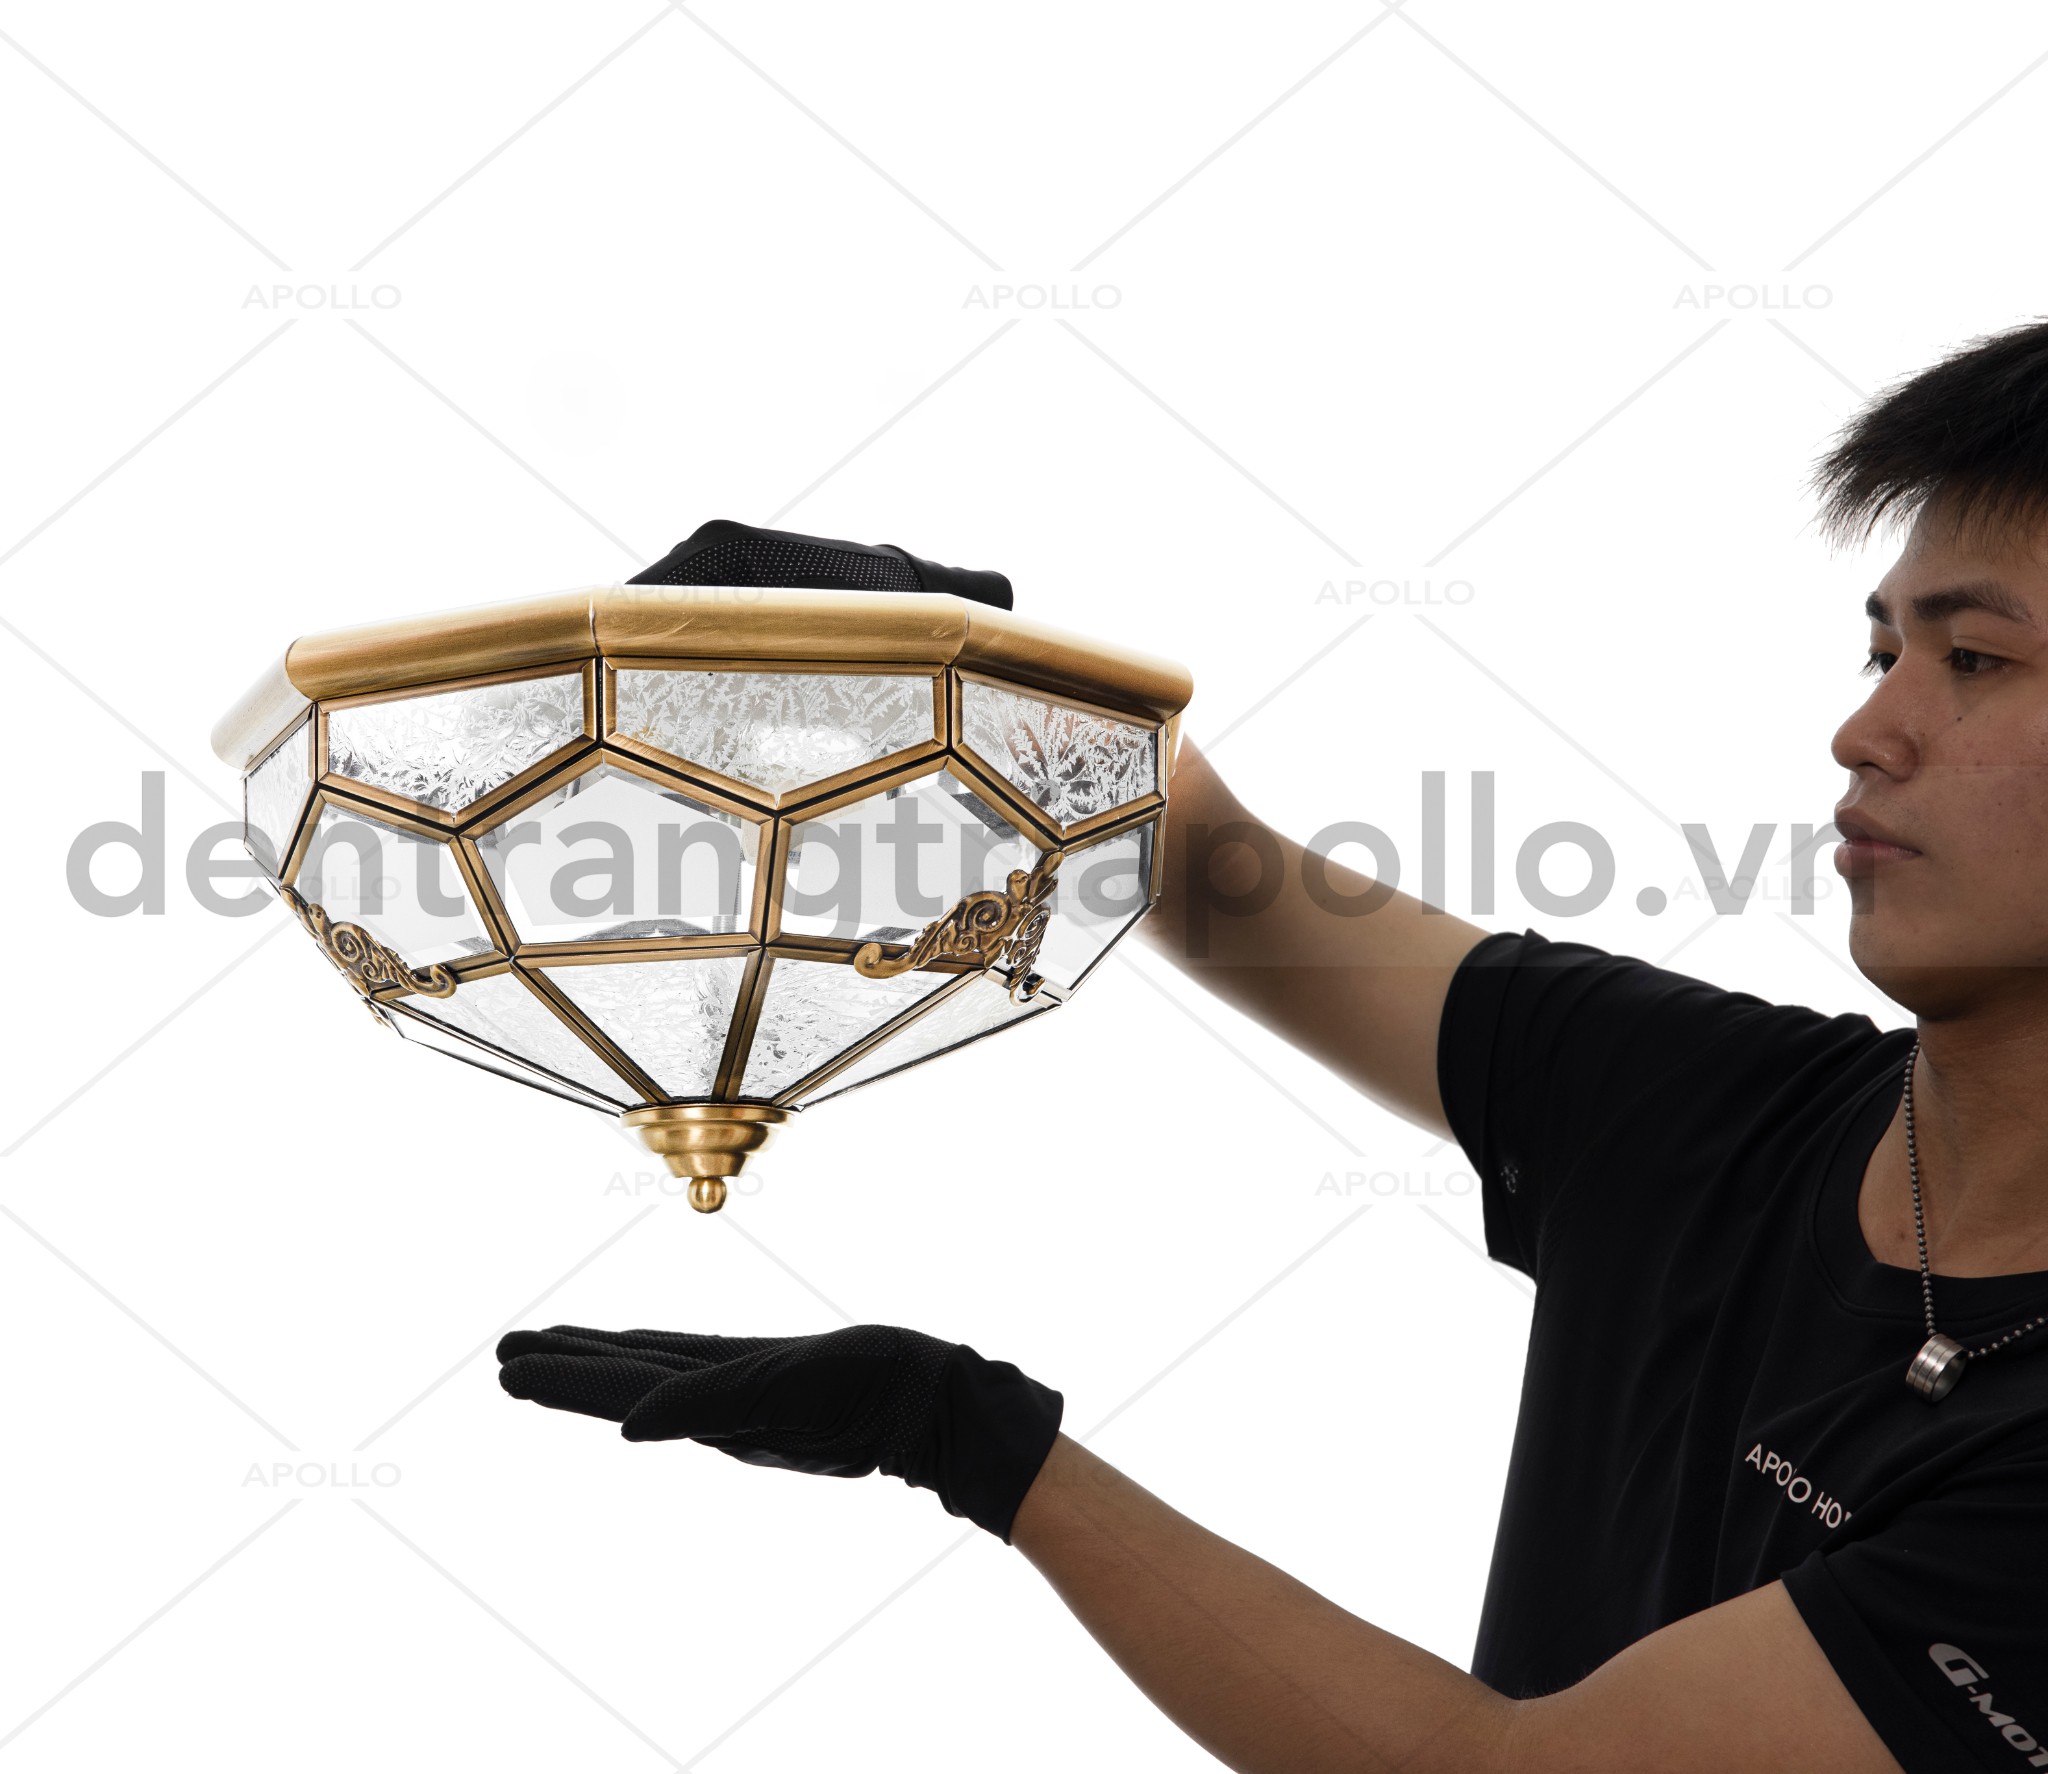 đèn áp trần cổ điển